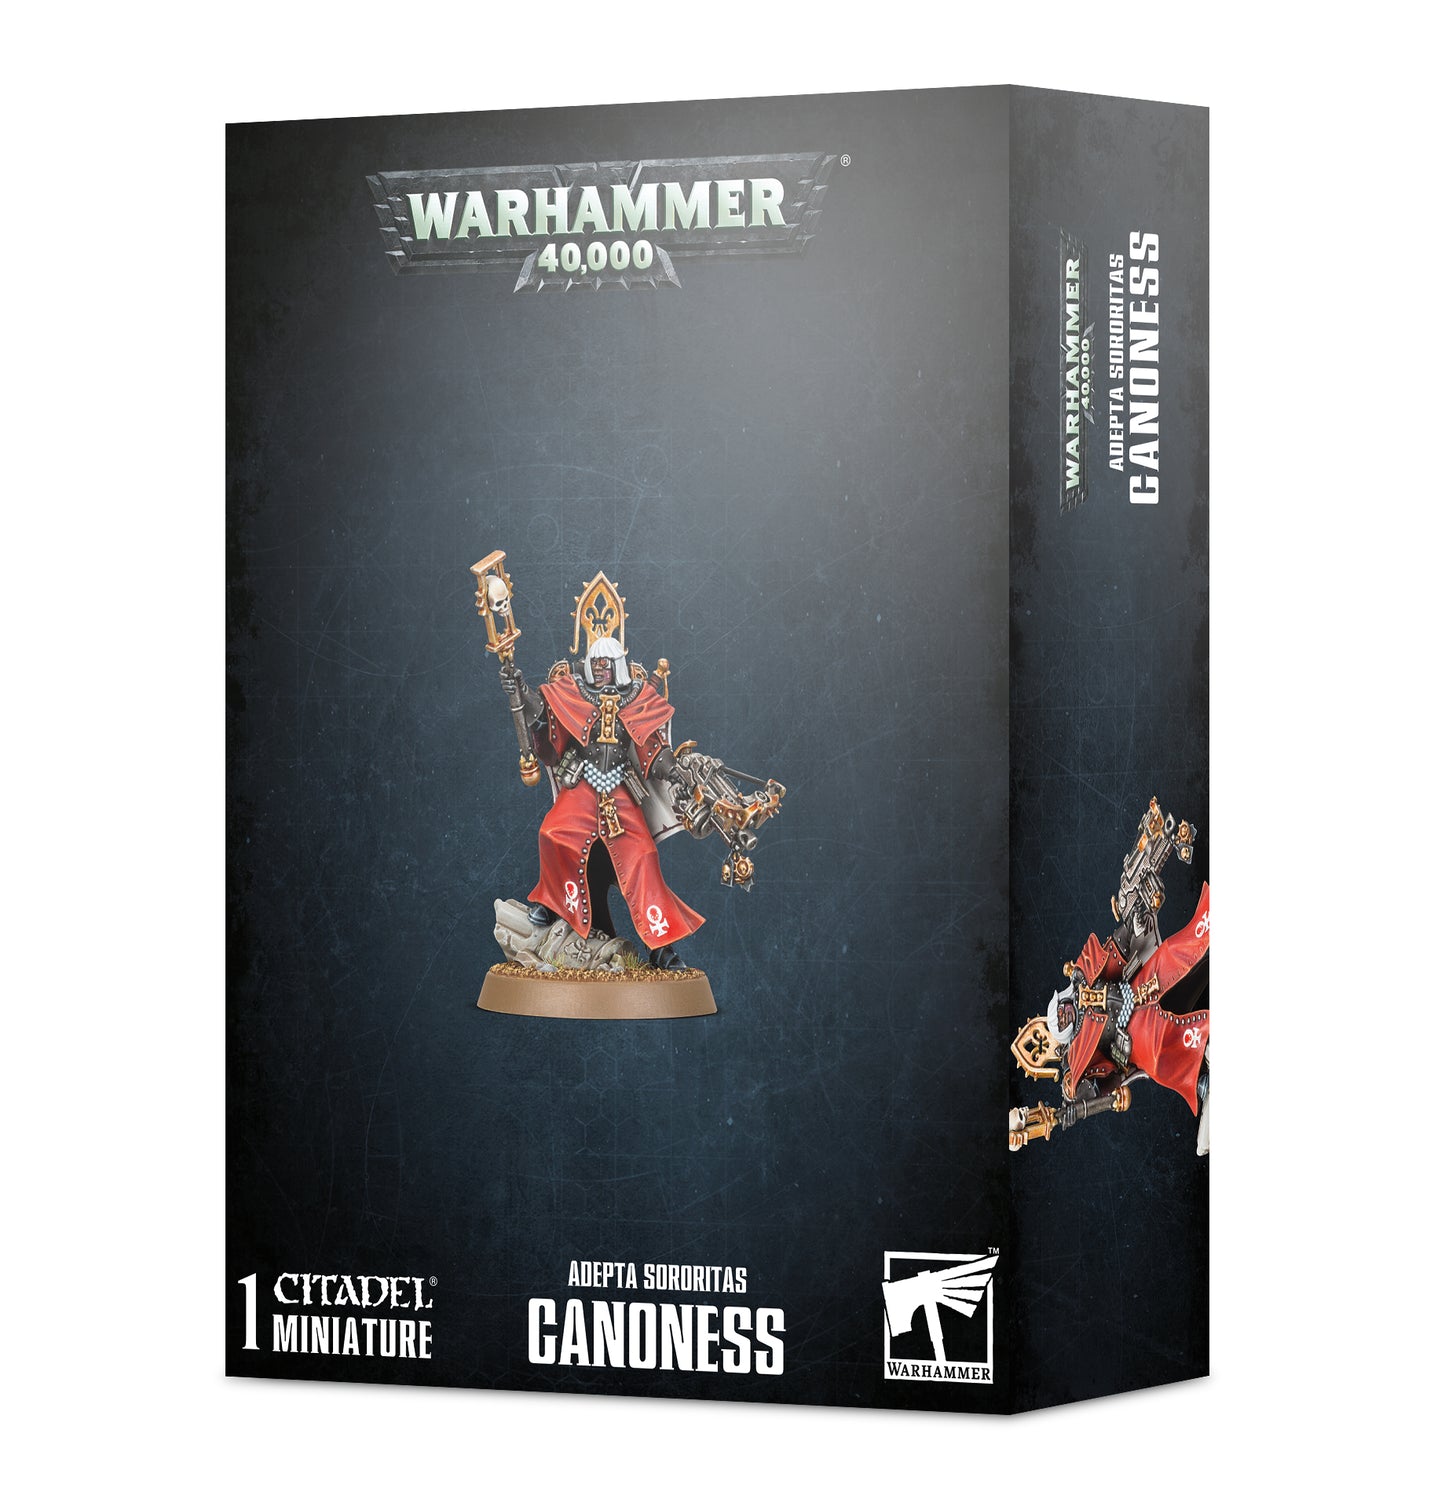 Adepta Sororitas Canoness, Warhammer 40,000